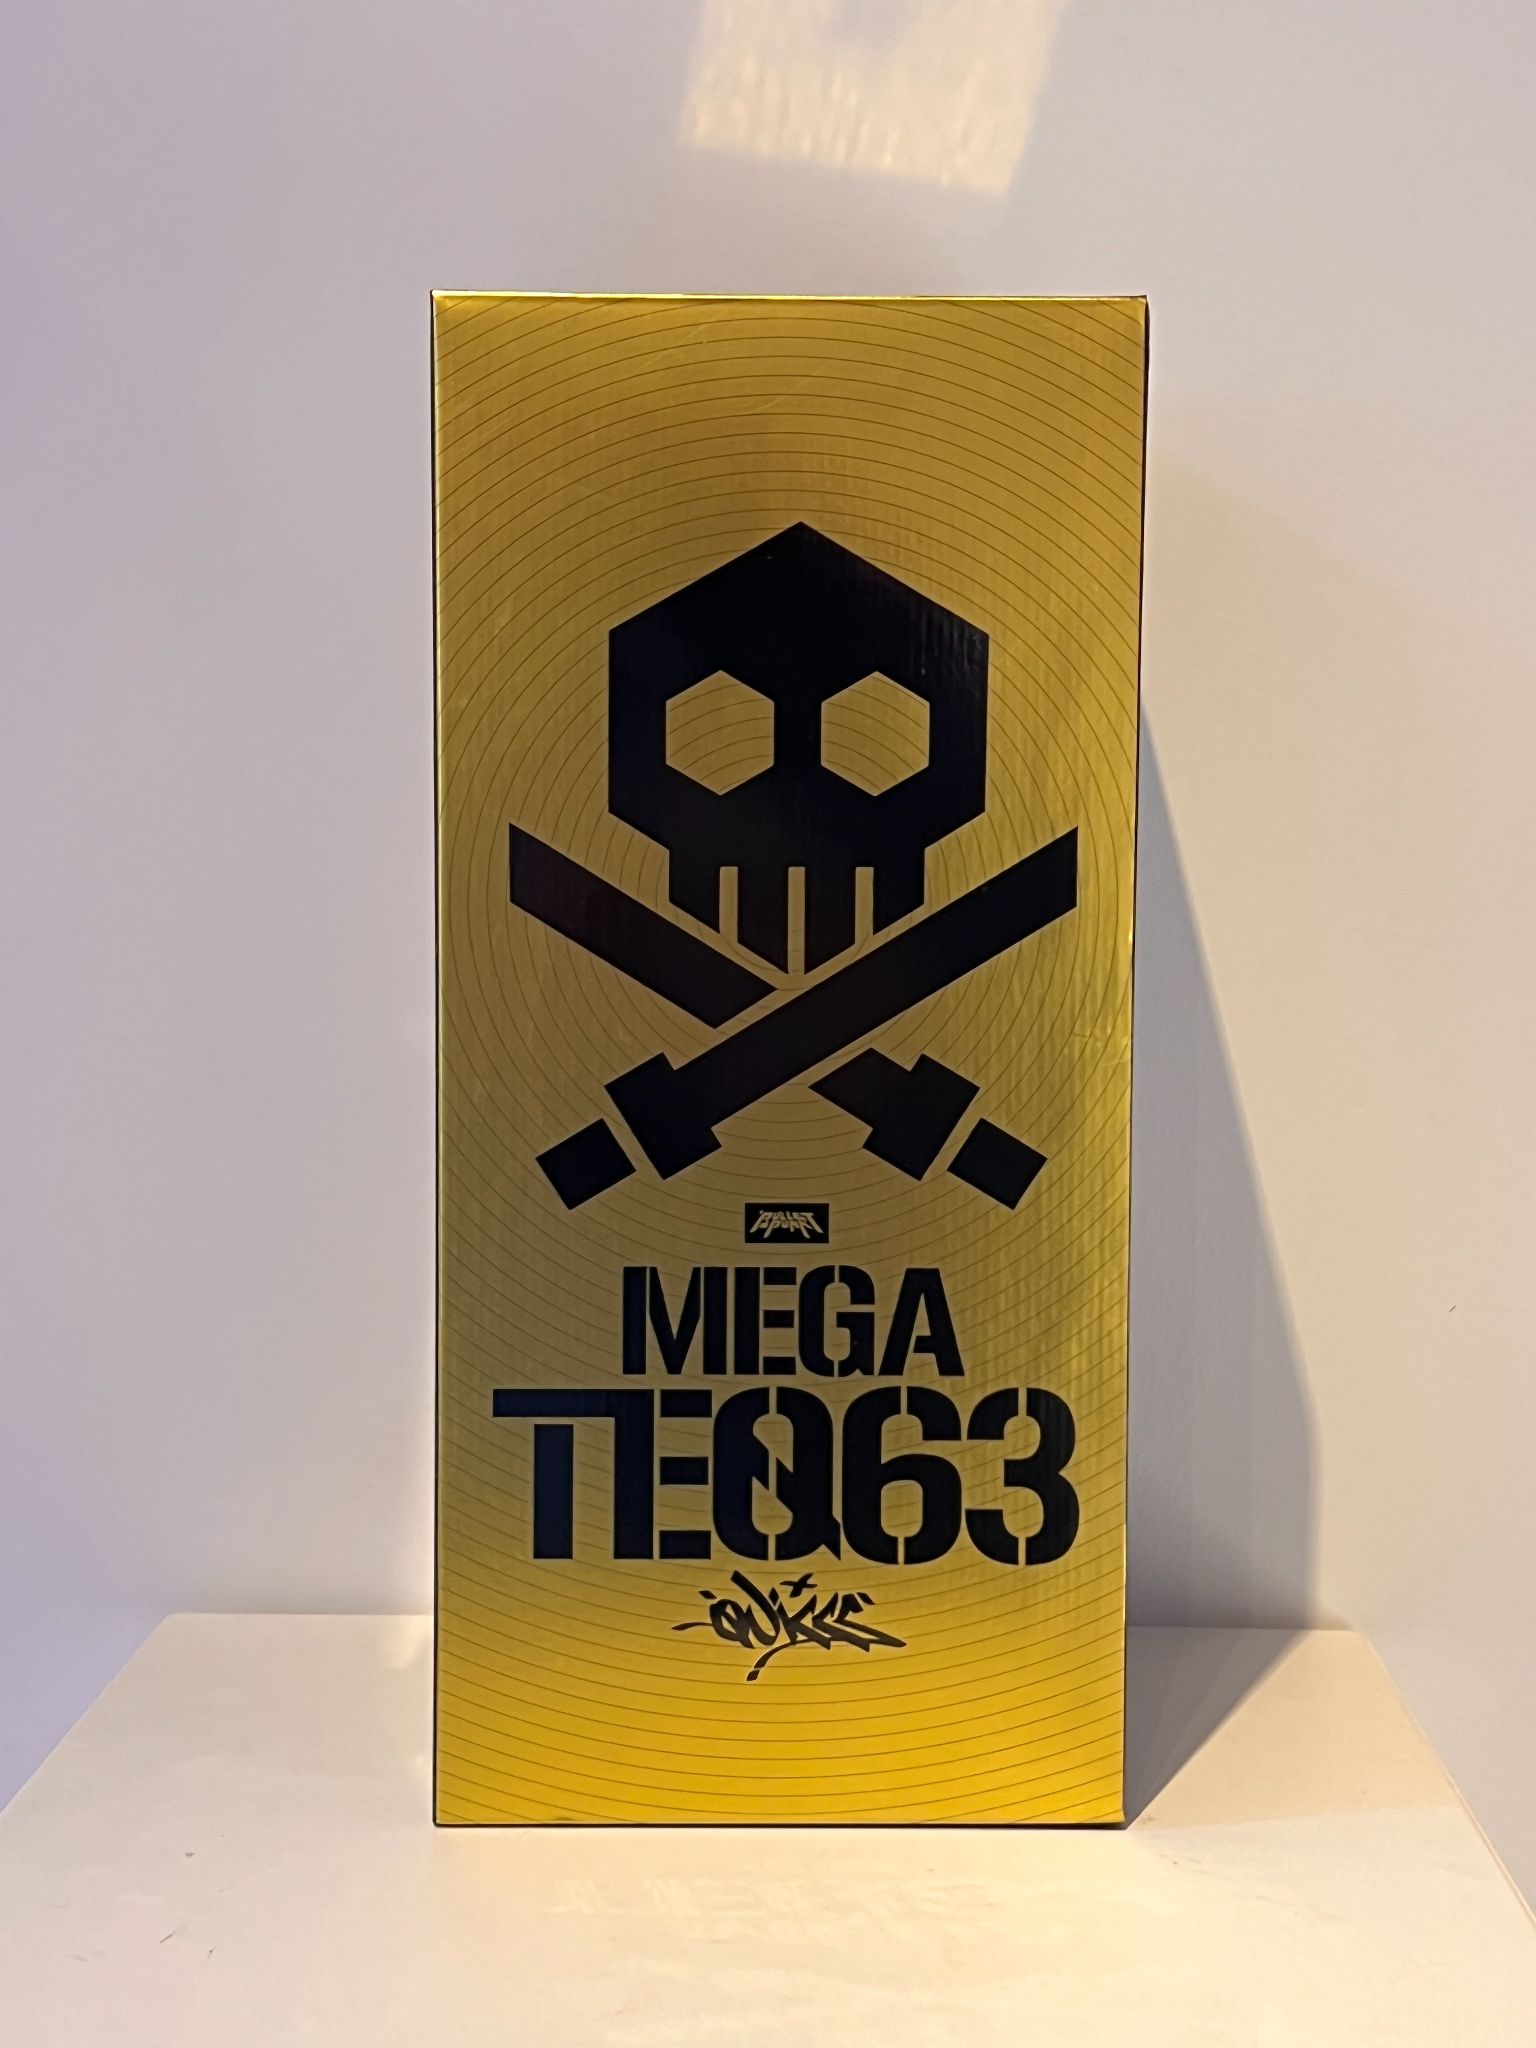 Quiccs Retro Destroyer Mega Teq63 Edition of 150 I am Retro exclusive 12 inch - 3